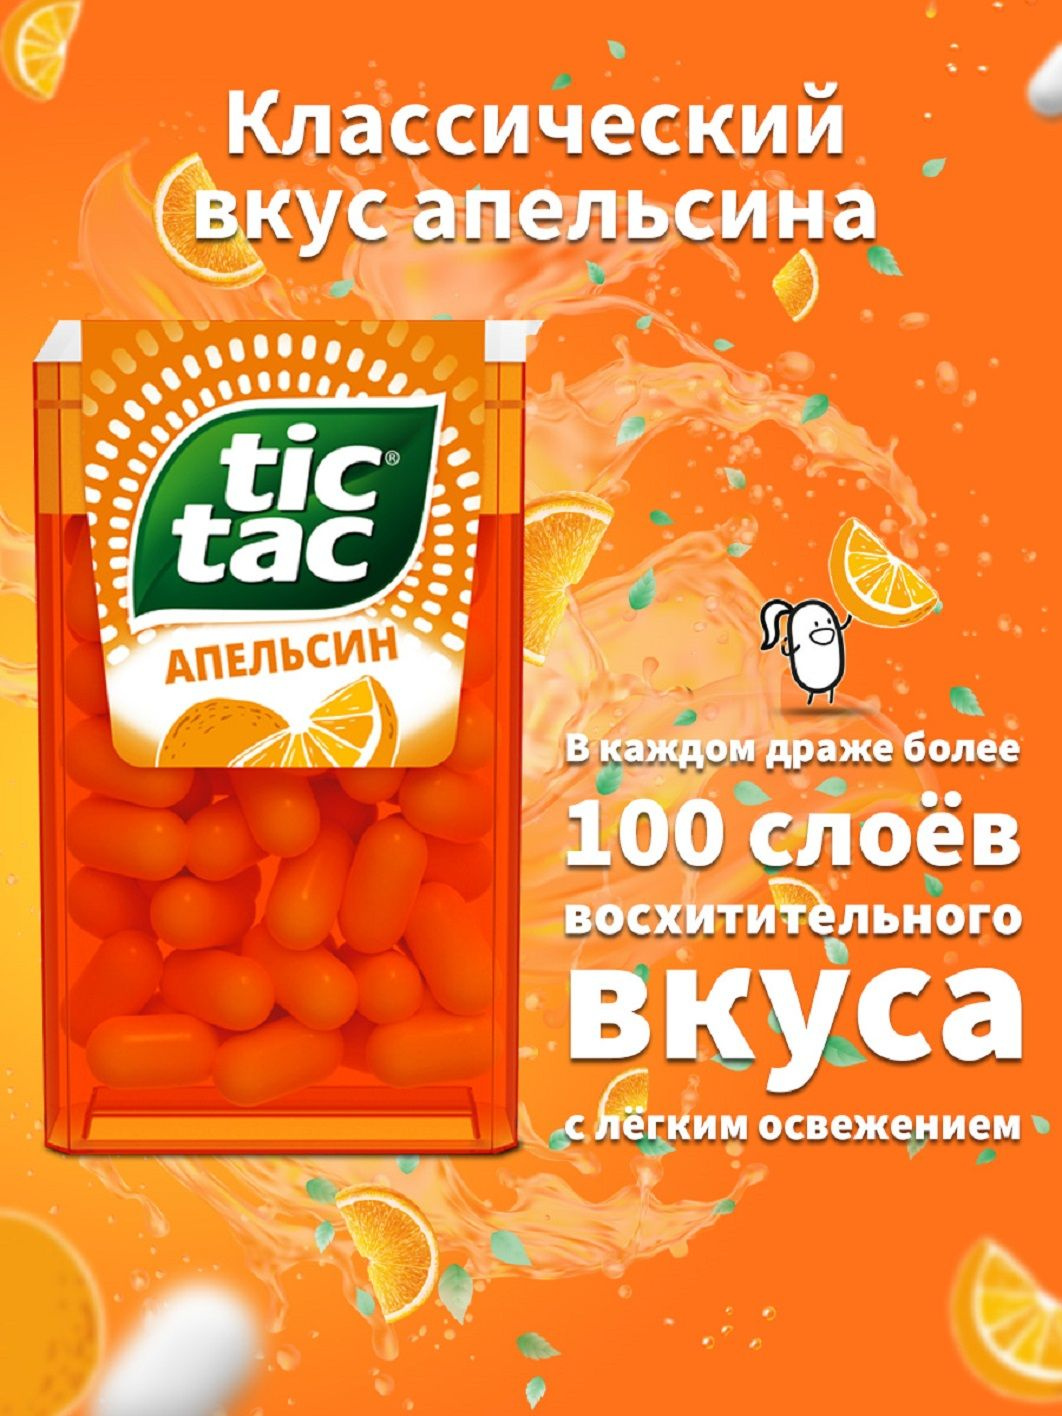 Классический вкус апельсина от бренда Tic Tac® – яркий цитрус с мягким освежением!